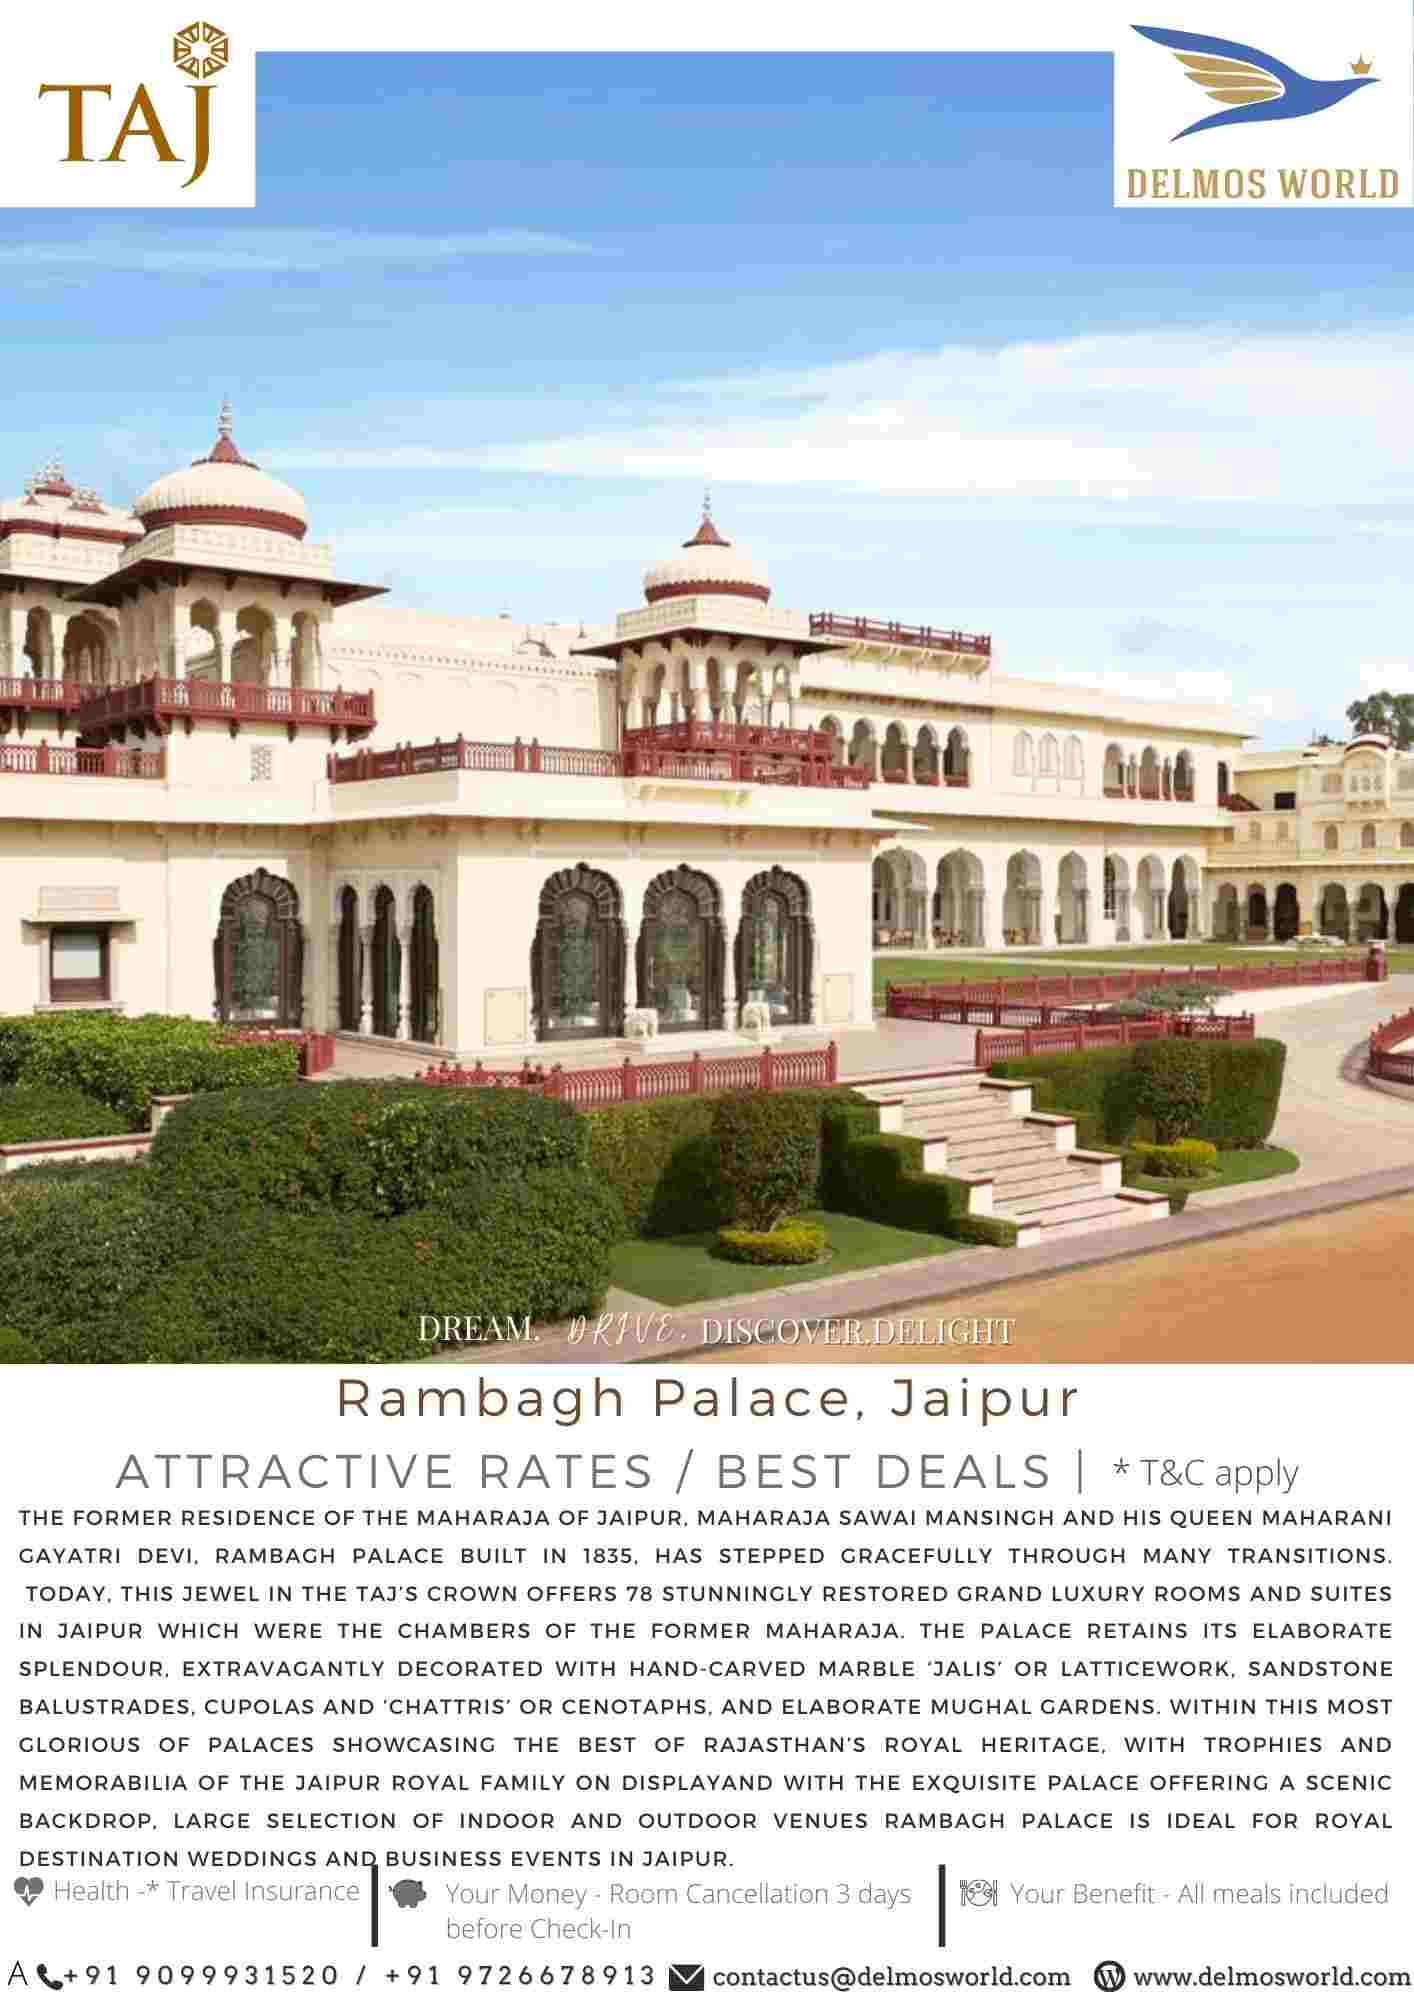 Rambagh Palace, Jaipur - Delmos World